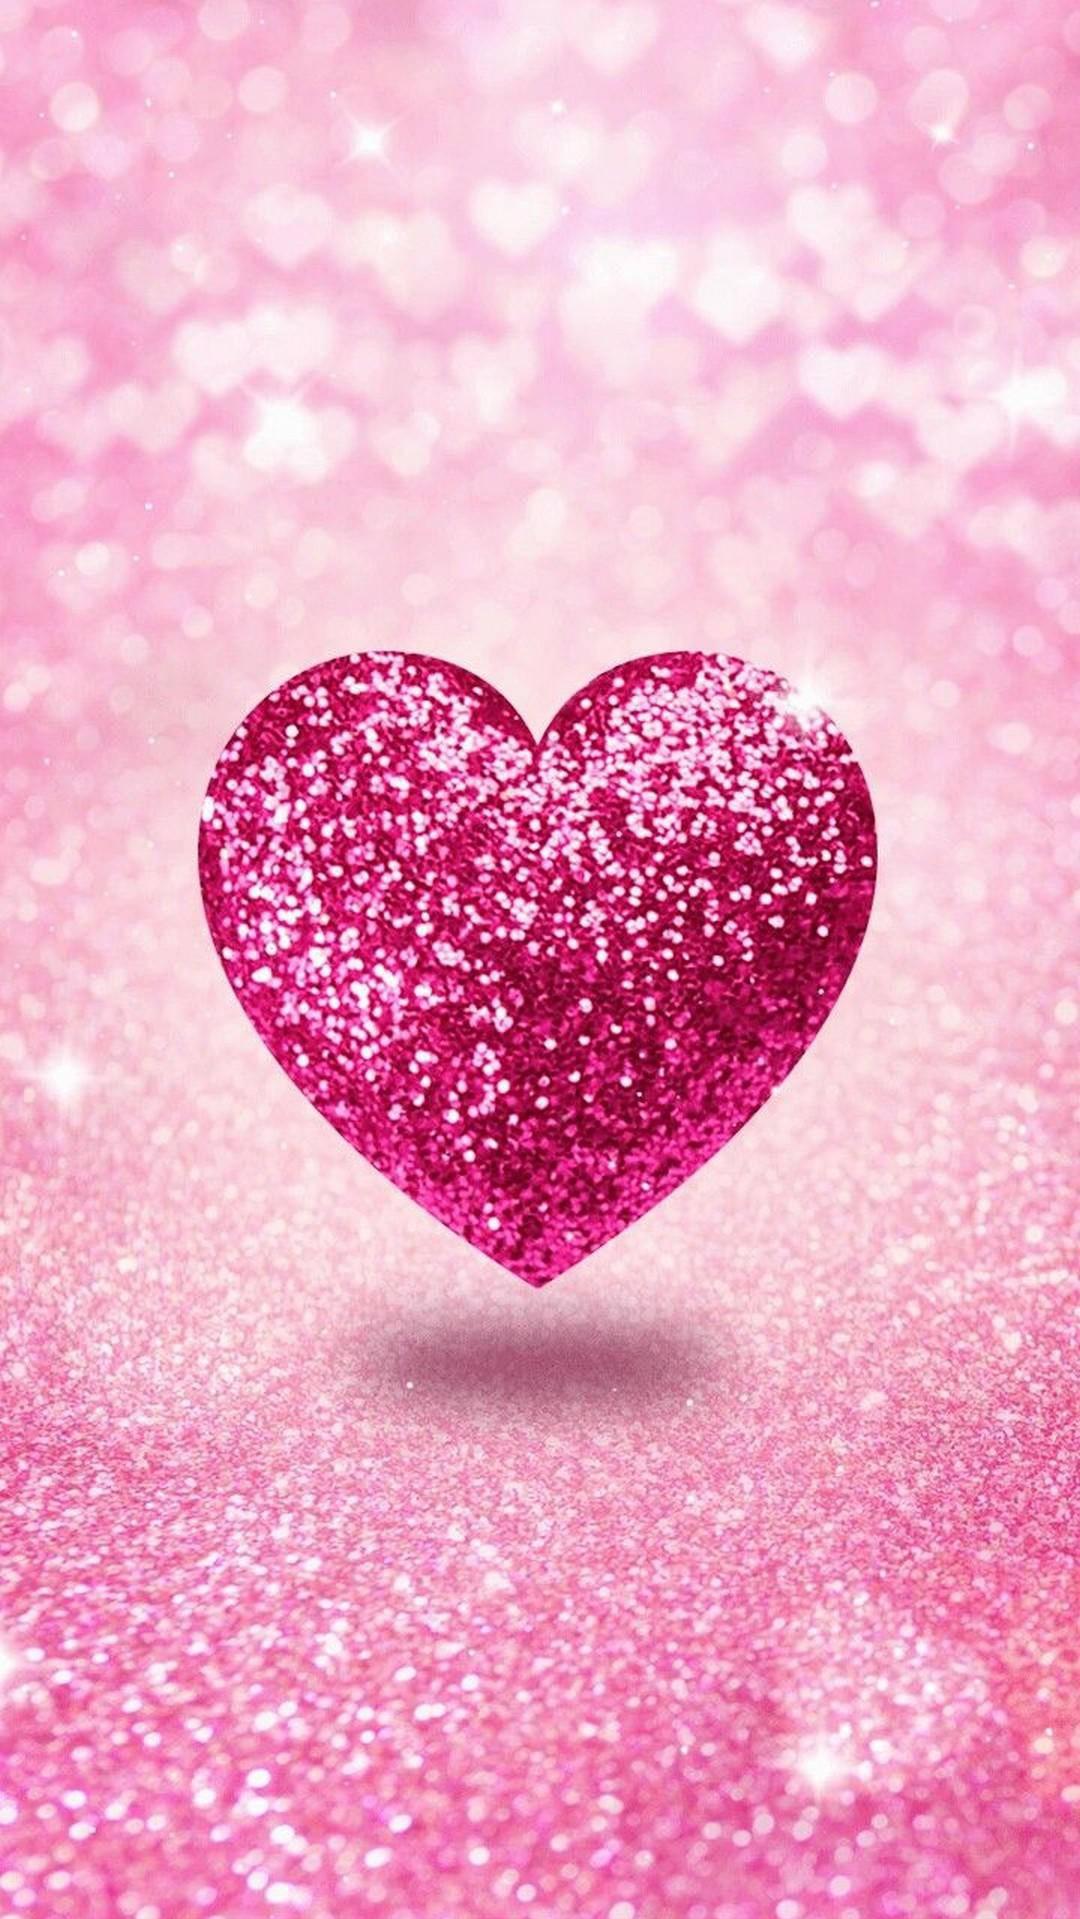 Lovely 3d Glittery Pink Heart Love iPhone Wallpaper